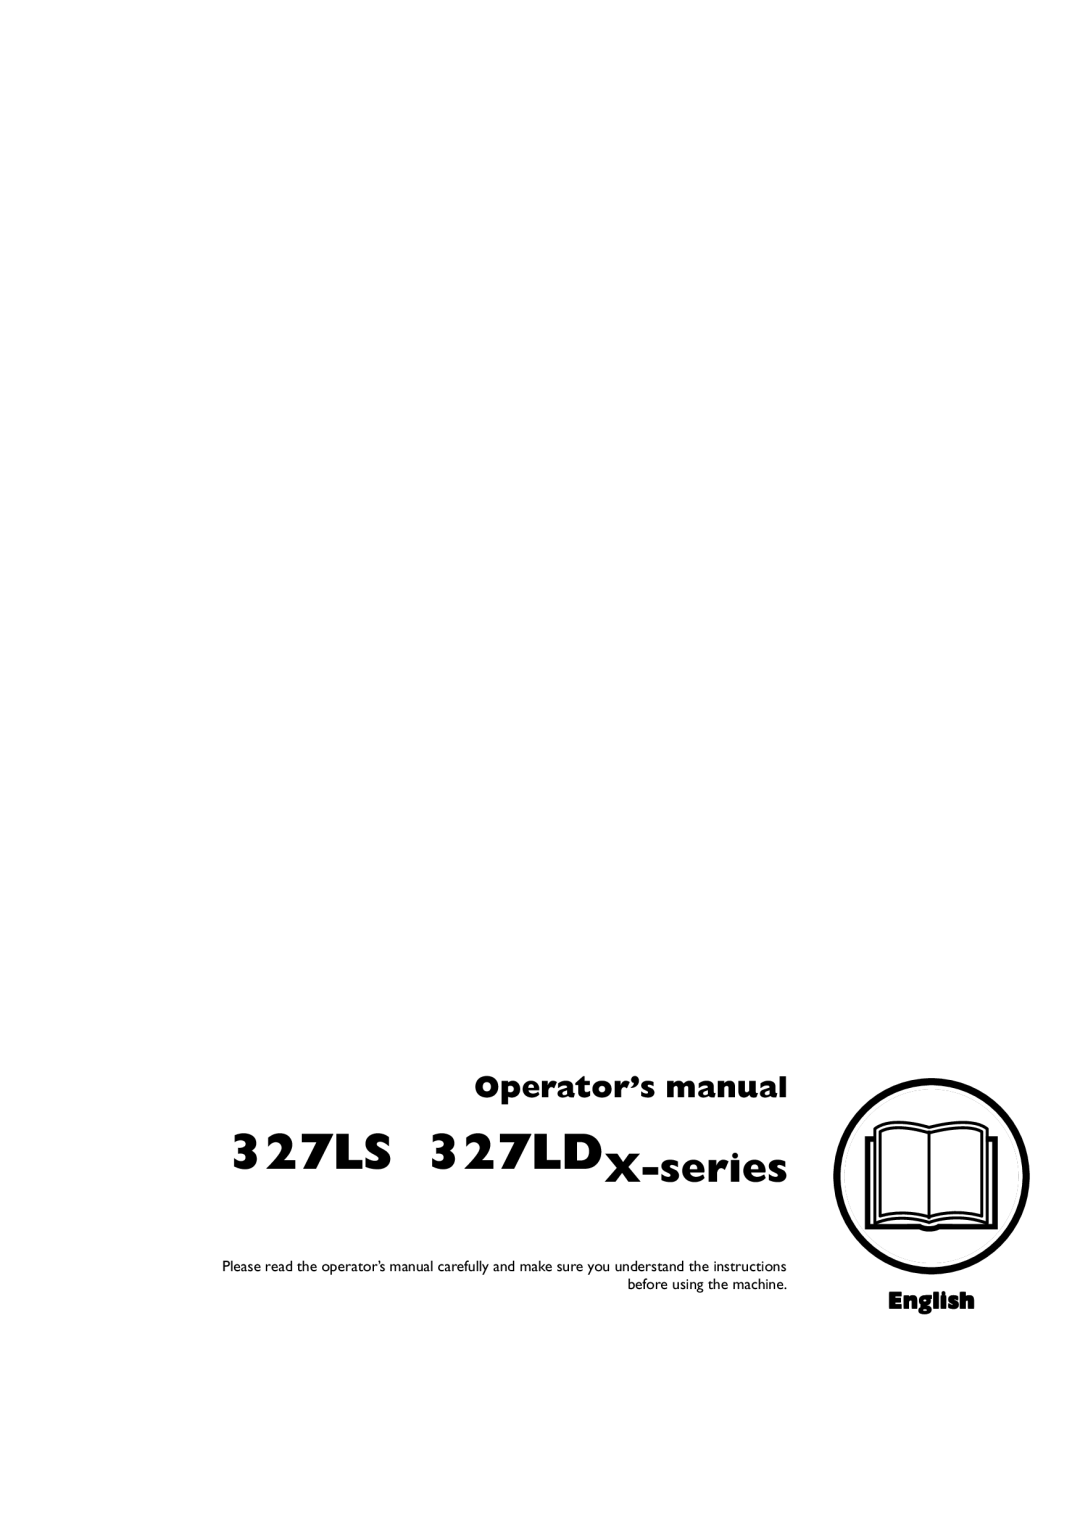 Husqvarna manual English, 327LS 327LDX-series, Operator’s manual 